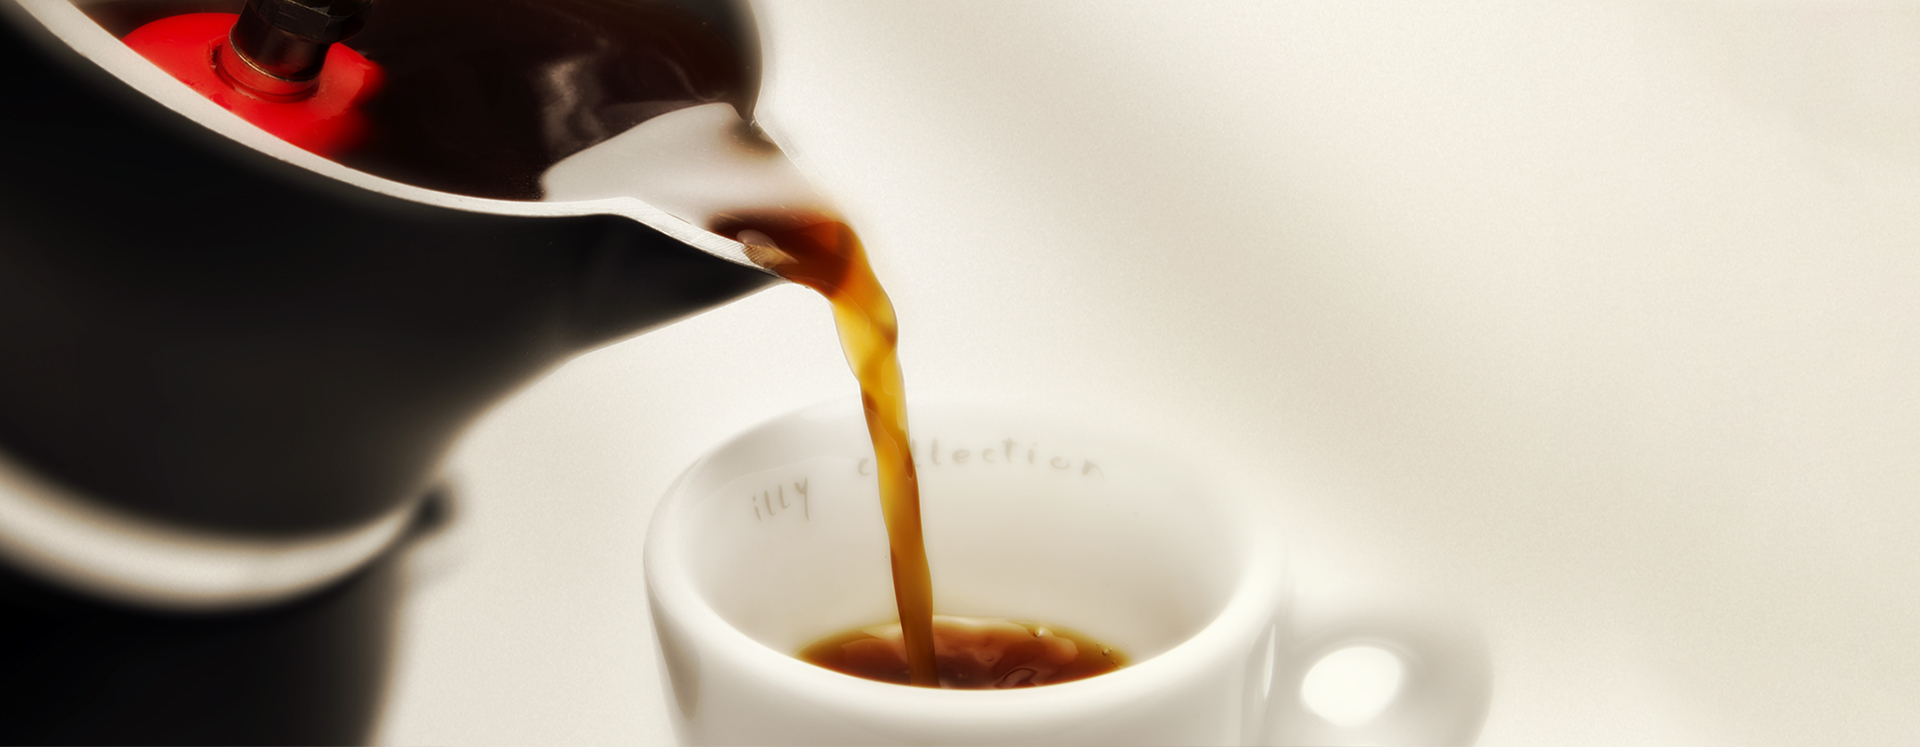 How To Make Moka Coffee With An Italian Coffee Maker Illy